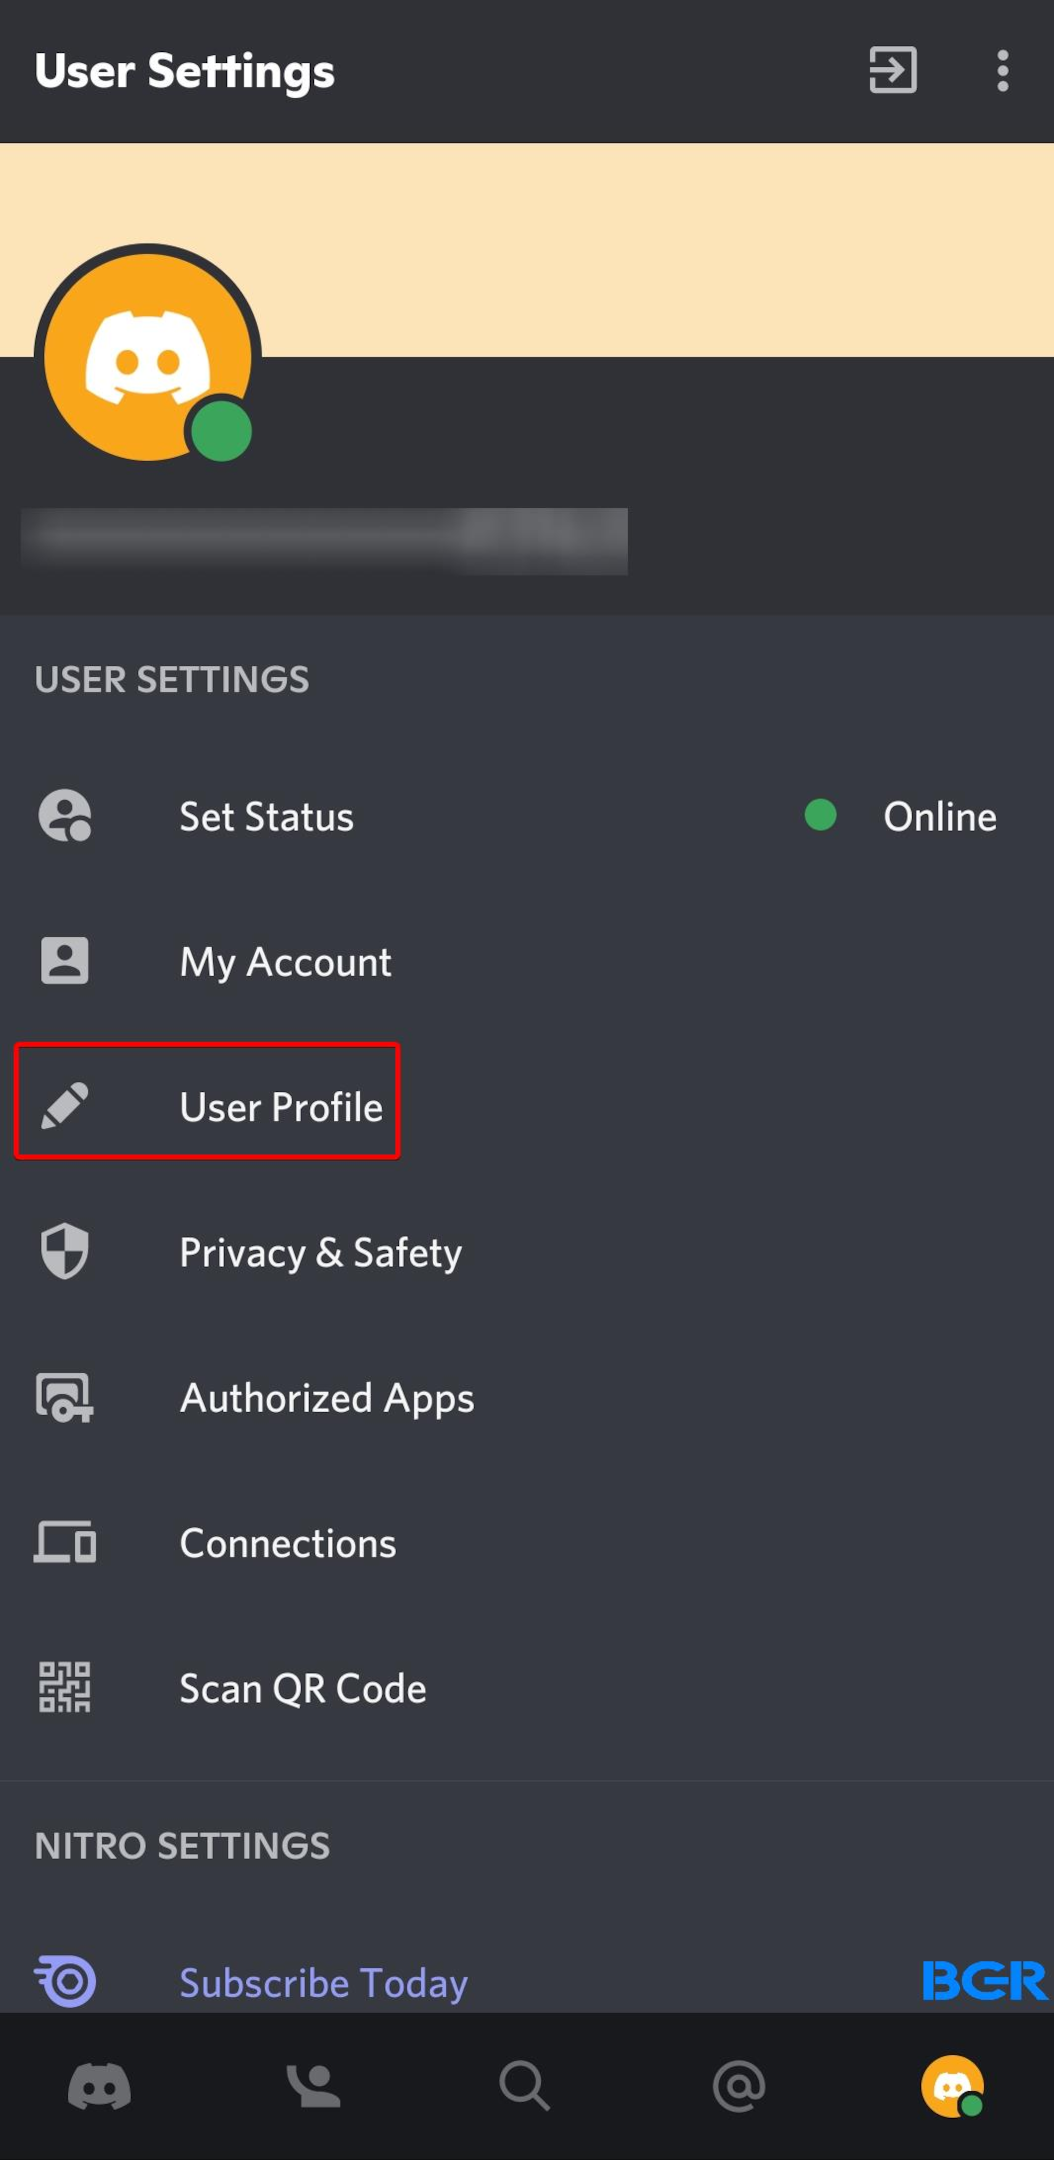 Tap on User Profile under User Settings